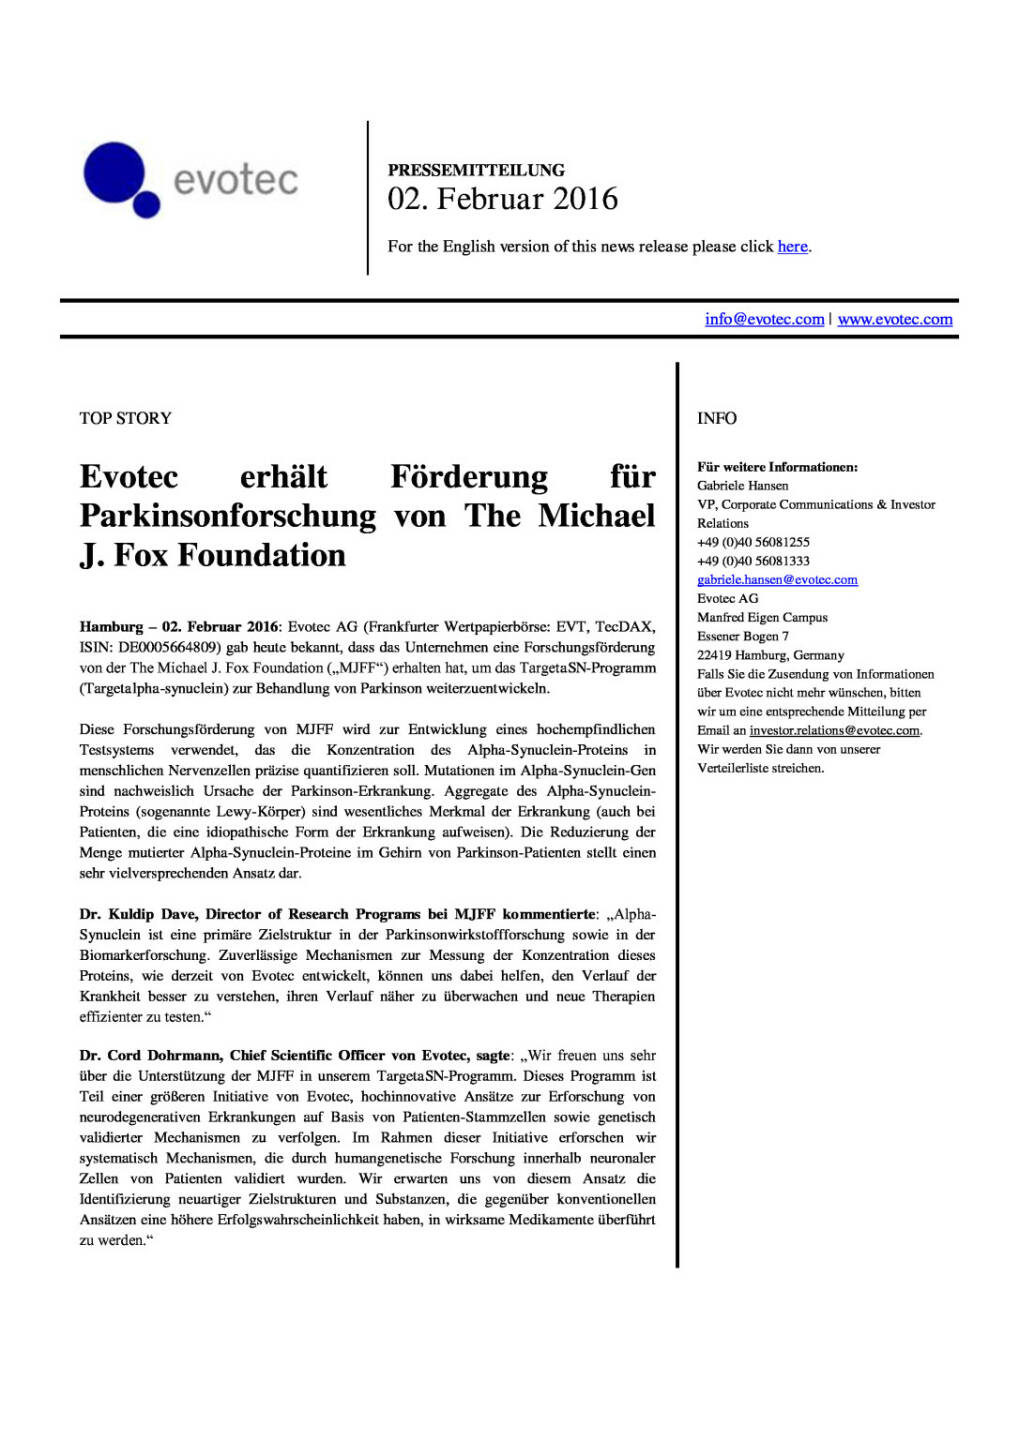 Evotec erhält Förderung für Parkinsonforschung von The Michael J. Fox Foundation, Seite 1/2, komplettes Dokument unter http://boerse-social.com/static/uploads/file_592_evotec_erhalt_forderung_fur_parkinsonforschung_von_the_michael_j_fox_foundation.pdf